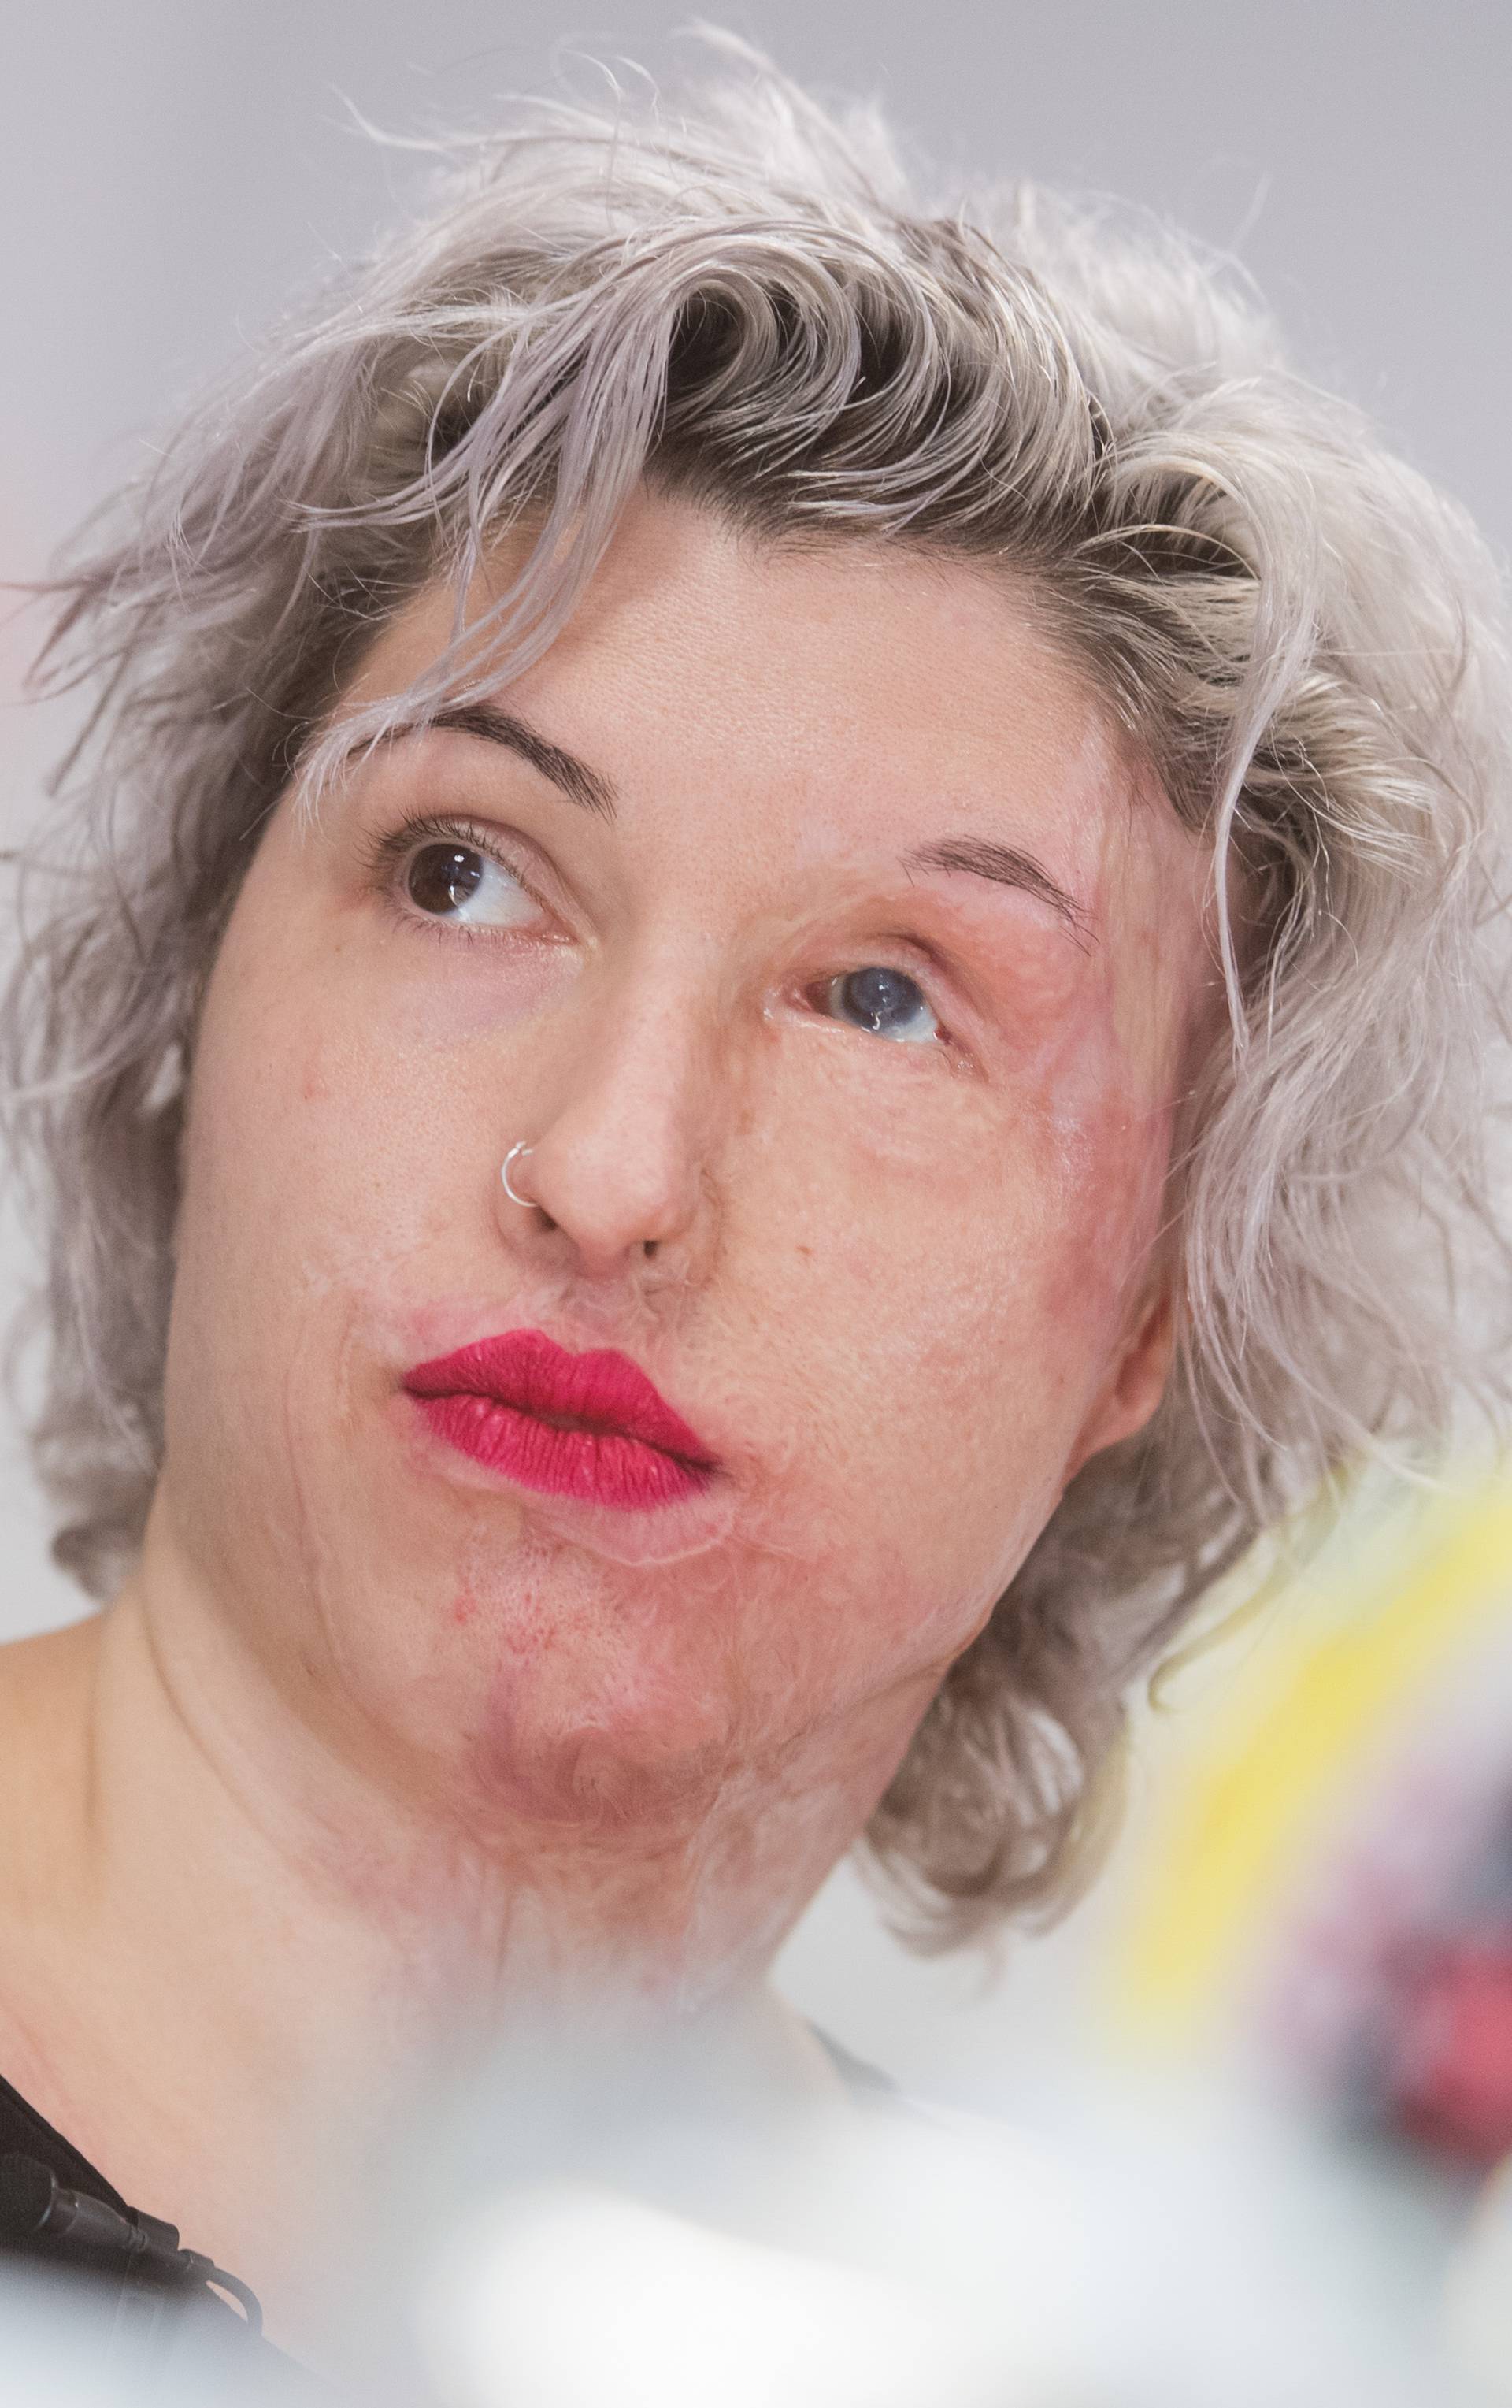 Acid victim Vanessa shows her face